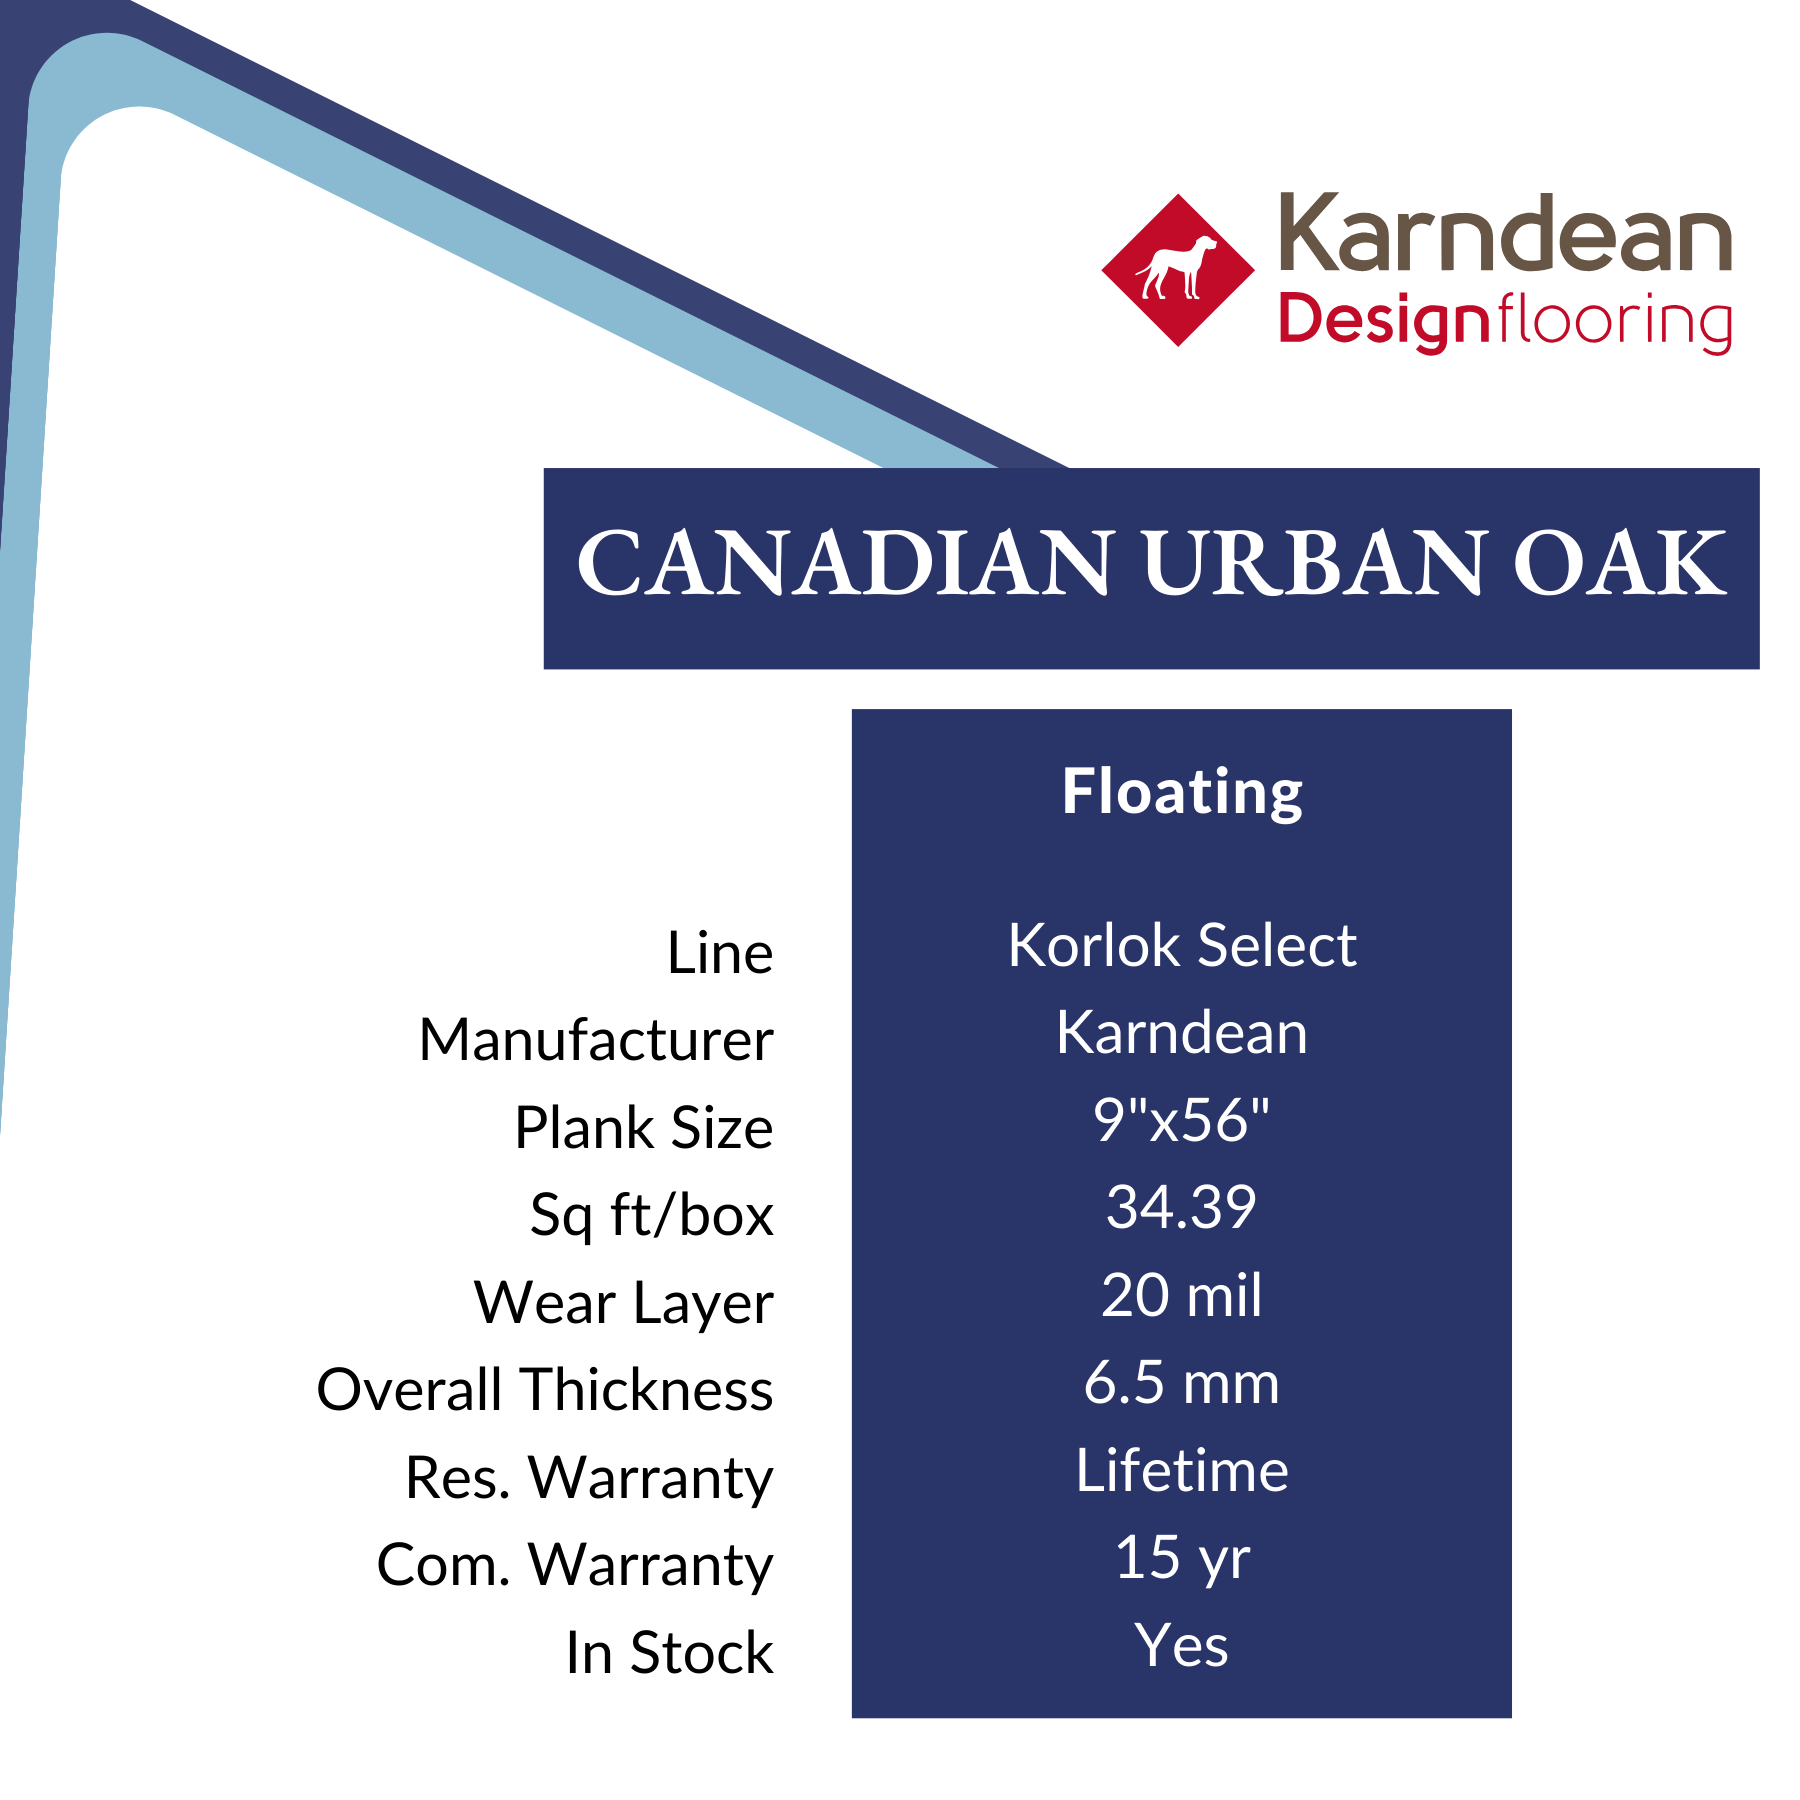 Canadian Urban Oak Luxury Vinyl Flooring from Karndean, sold at Calhoun’s, Springfield, IL specs